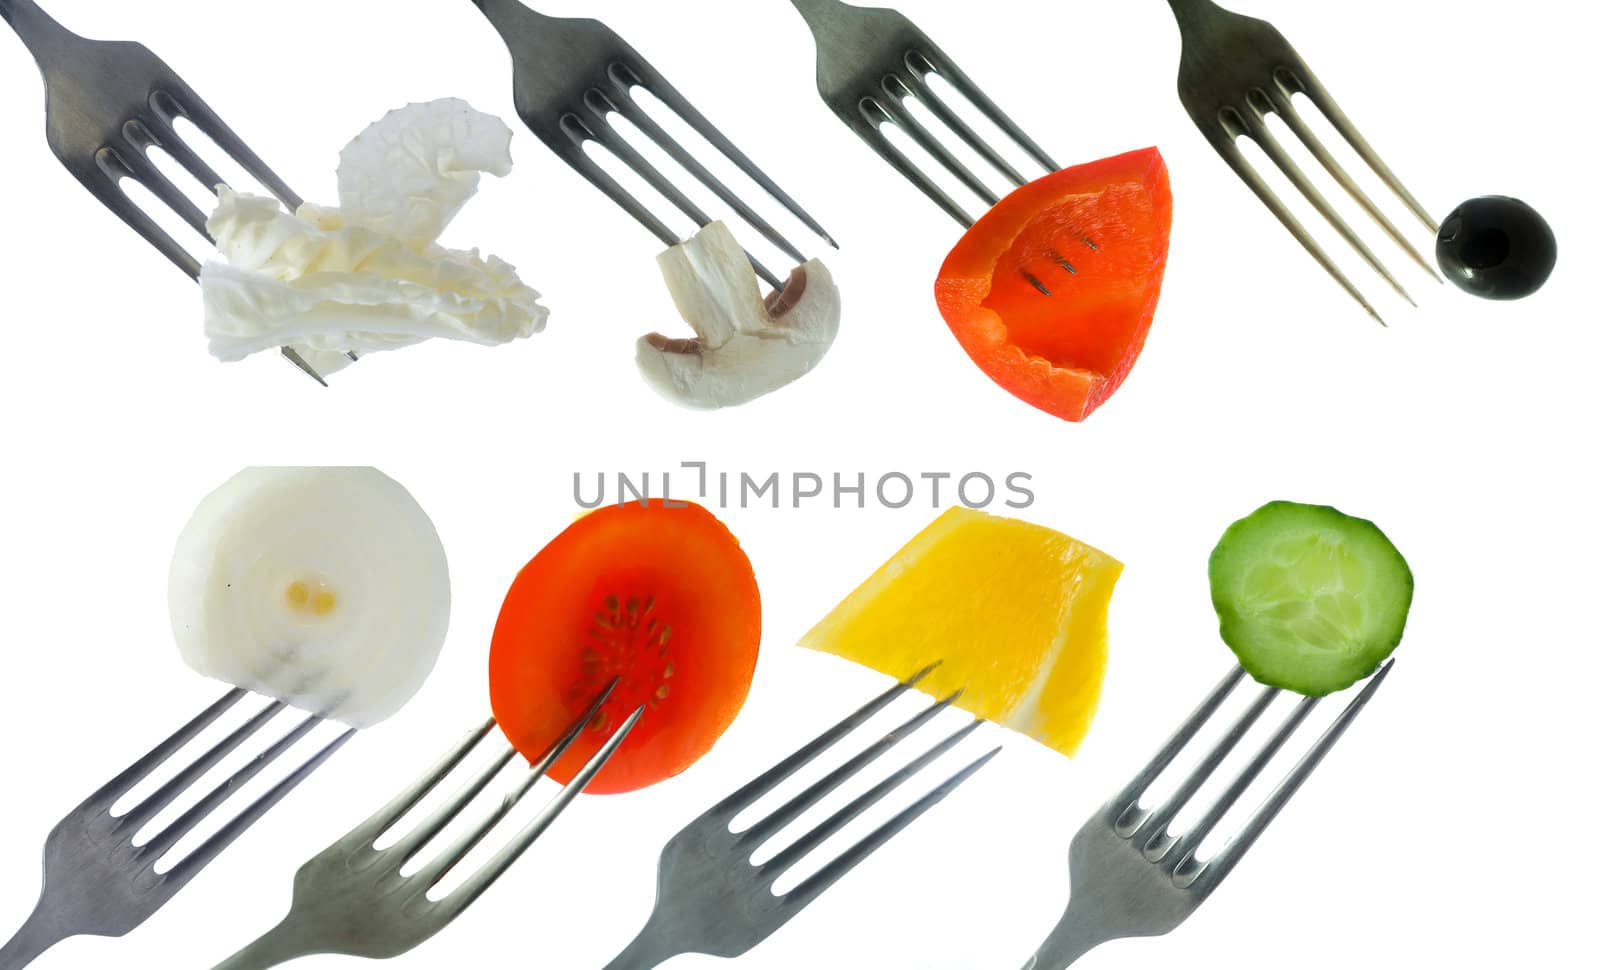 Forks with vegetables by velkol